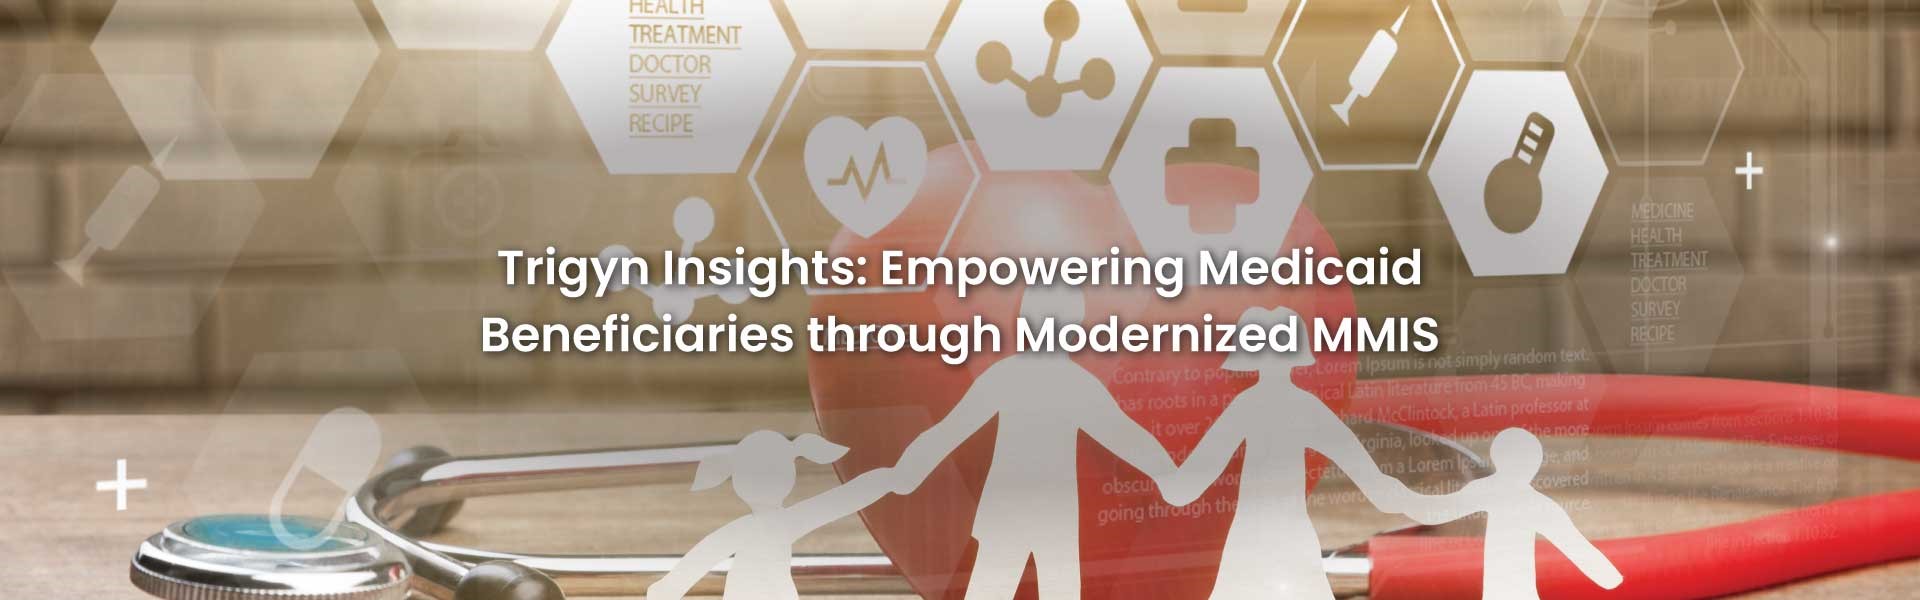 Modernized MMIS impact on beneficiaries